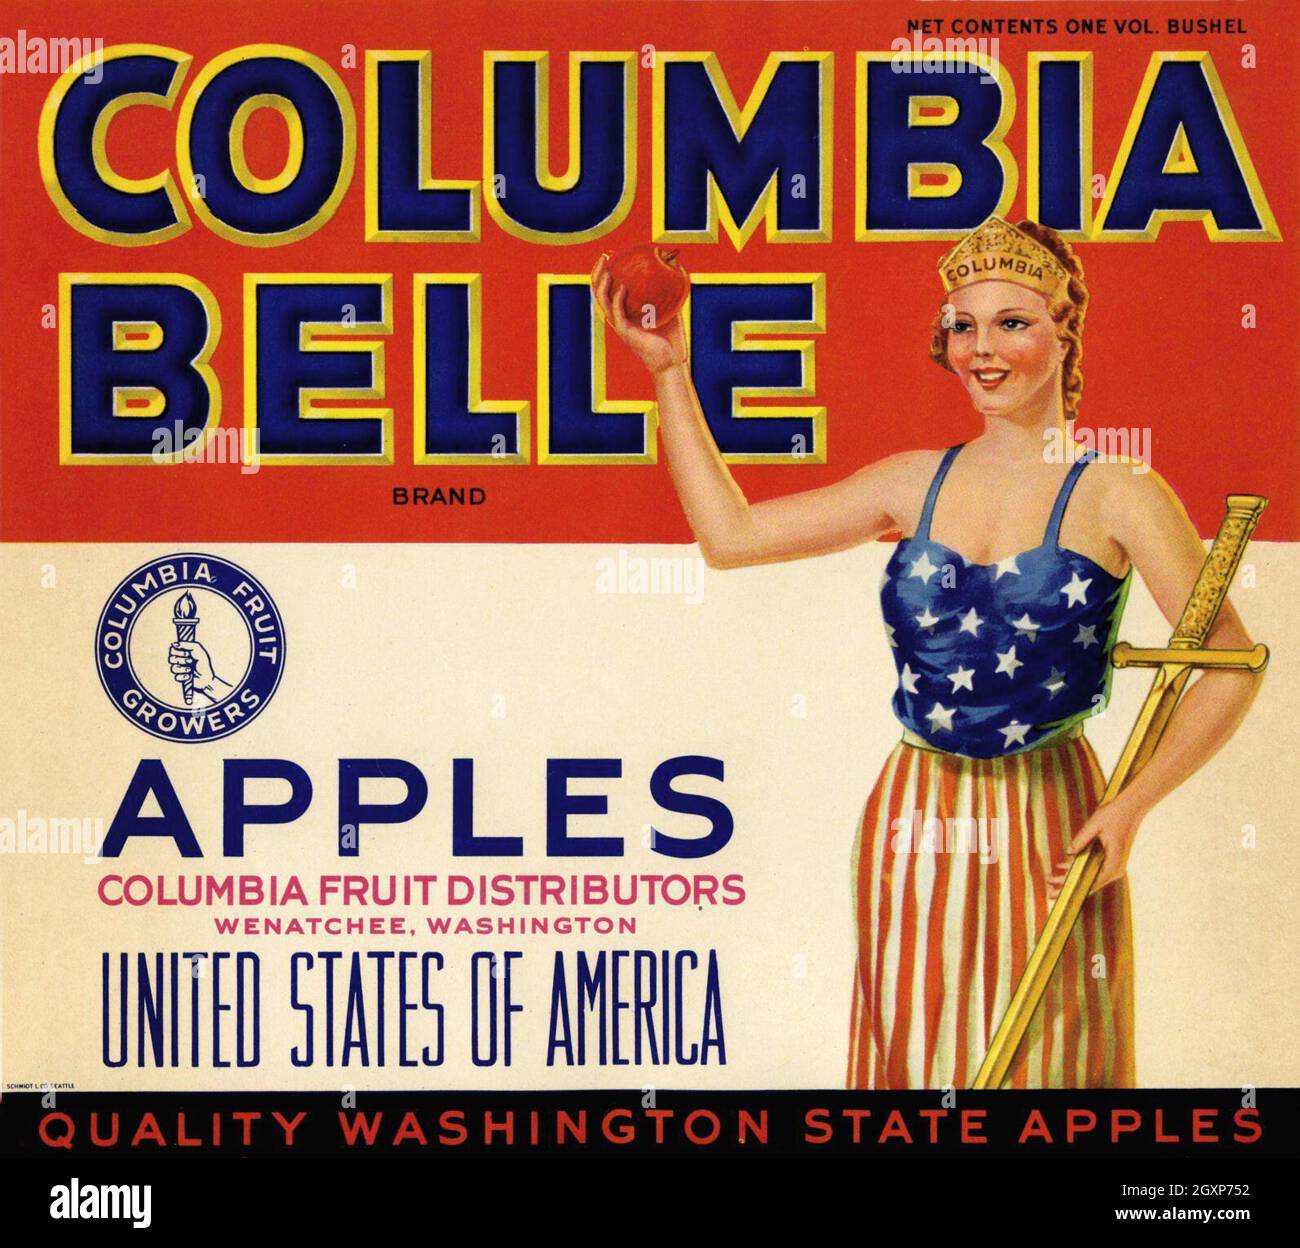 Columbia Belle Brand Apples Stock Photo